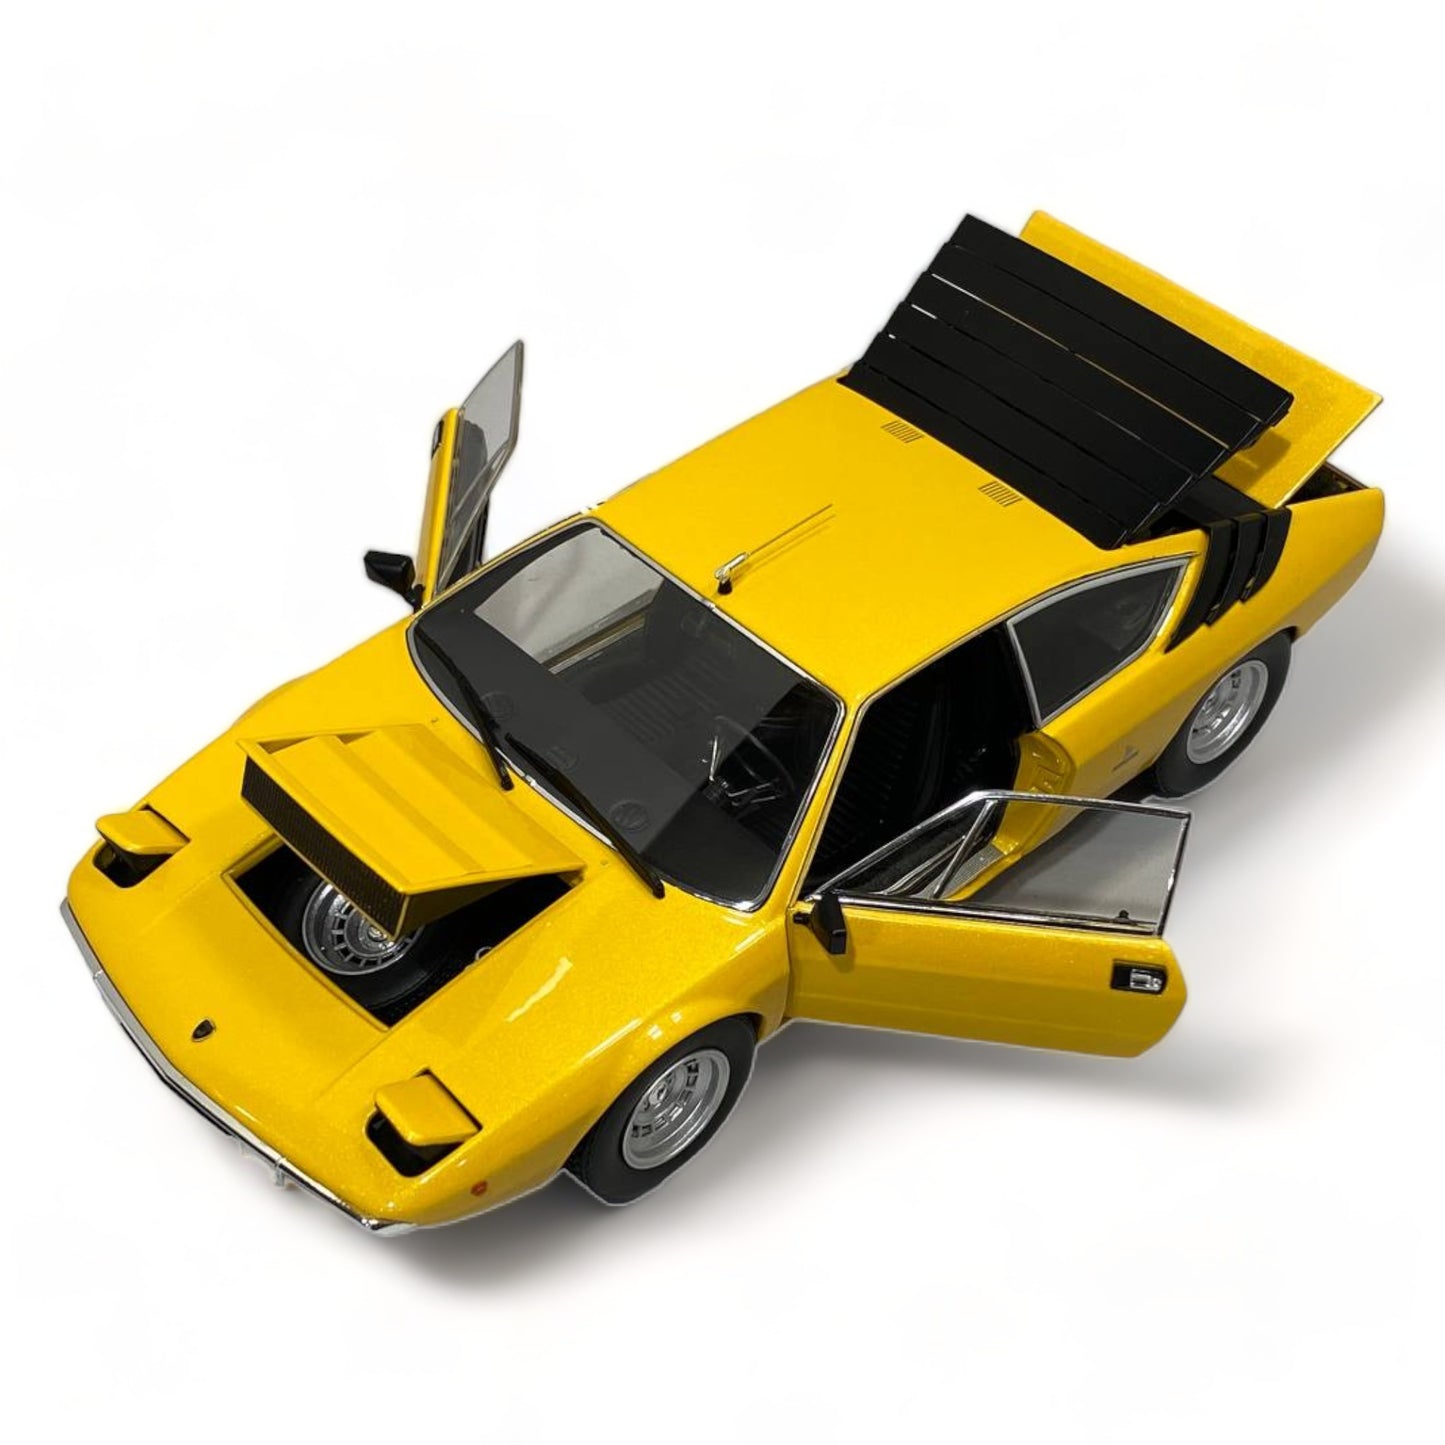 1/18 Diecast KYOSHO Lamborghini Urraco Yellow Scale Model Car|Sold in Dturman.com Dubai UAE.